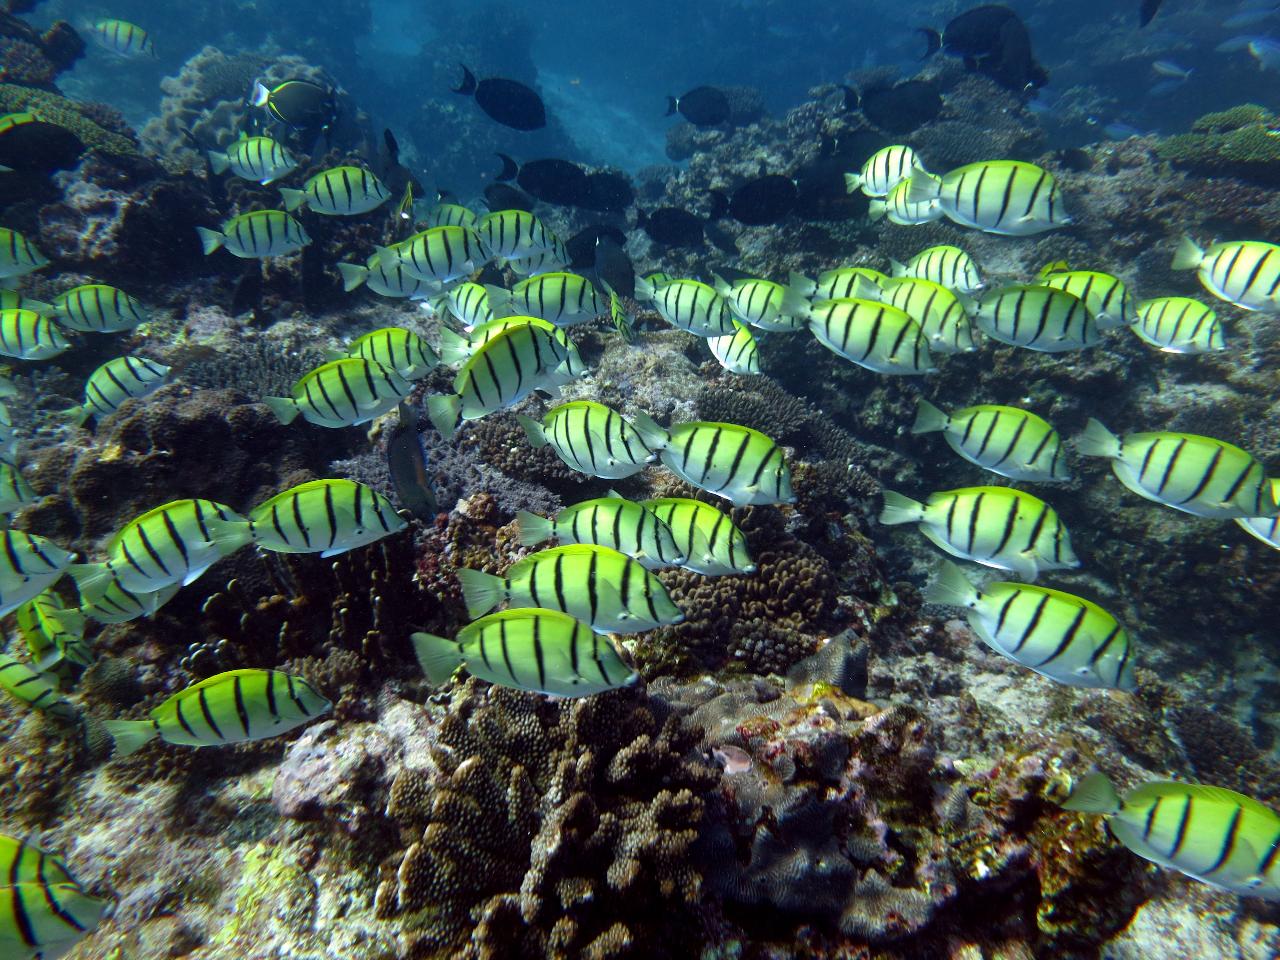 The Ningaloo Reef